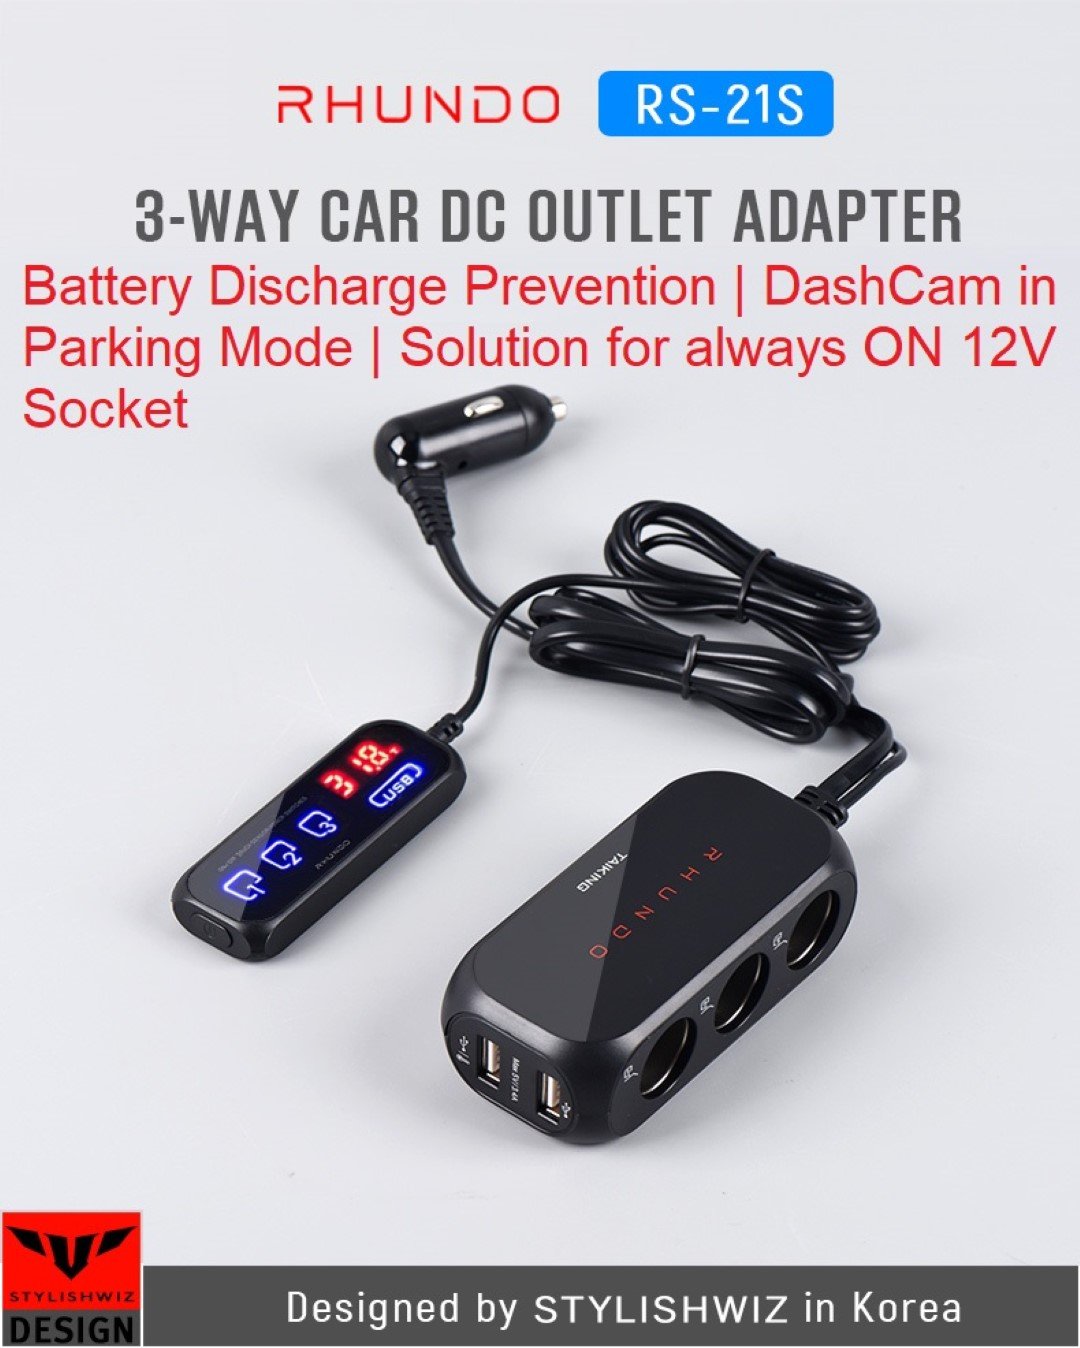 Rhundo RS-21S Car USB Charger Splitter Adatpor for DashCam Parking